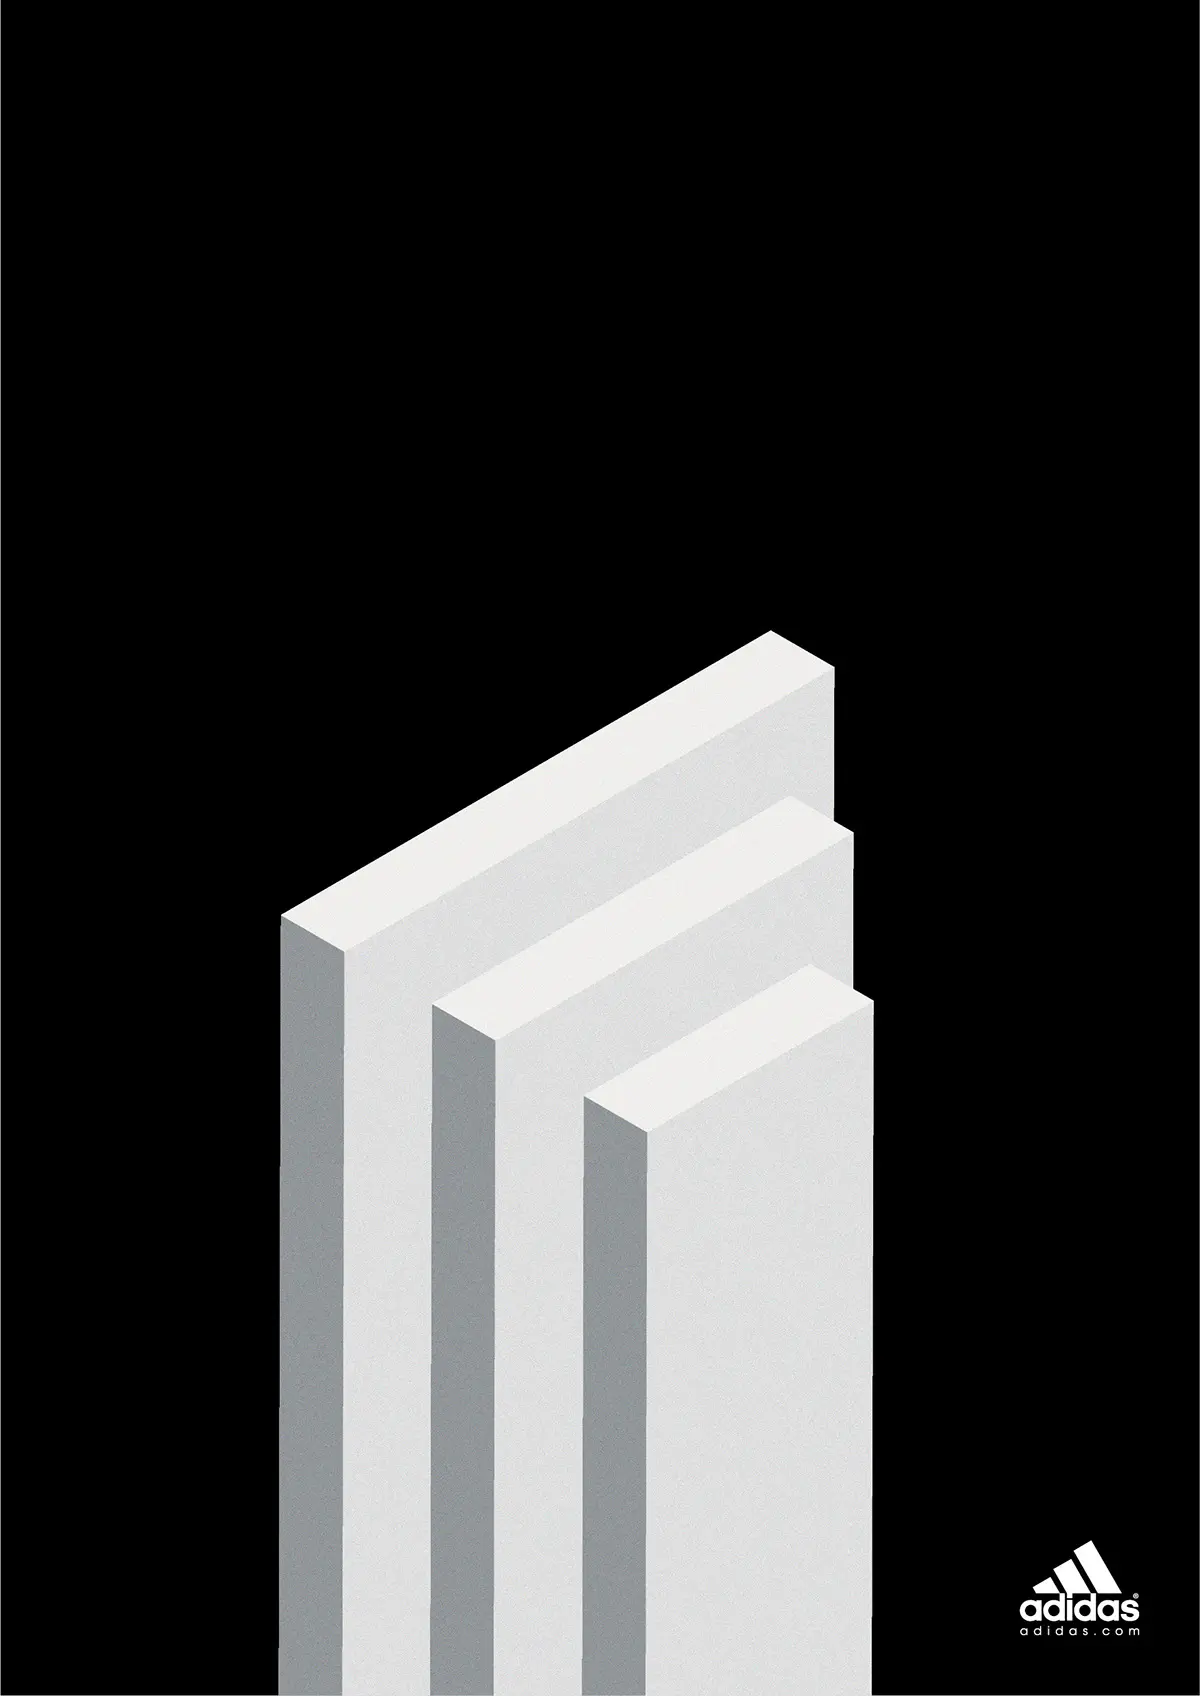 Adidas - Isometric 'Three Bars' Typographic Poster